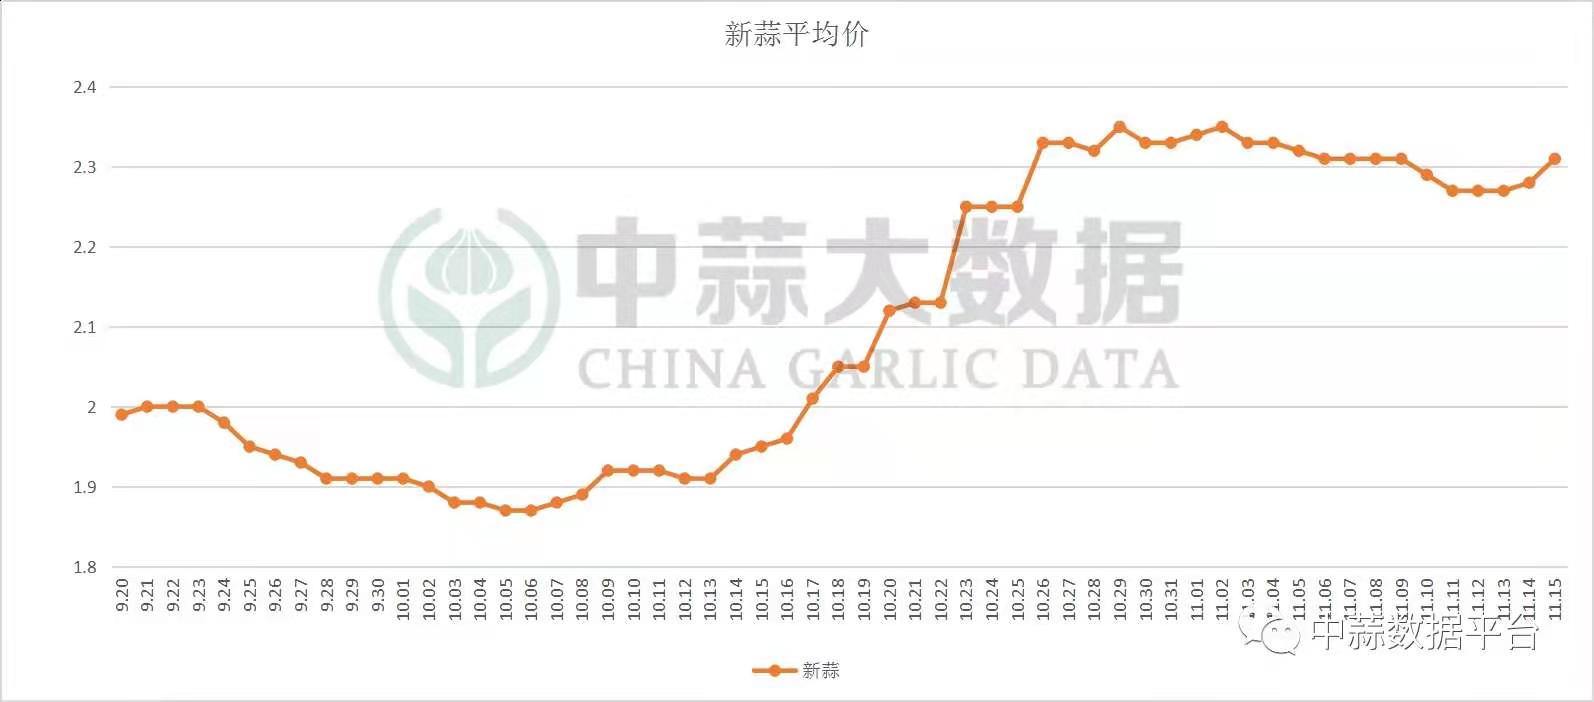 Export China garlic & ocean rate forecast 3